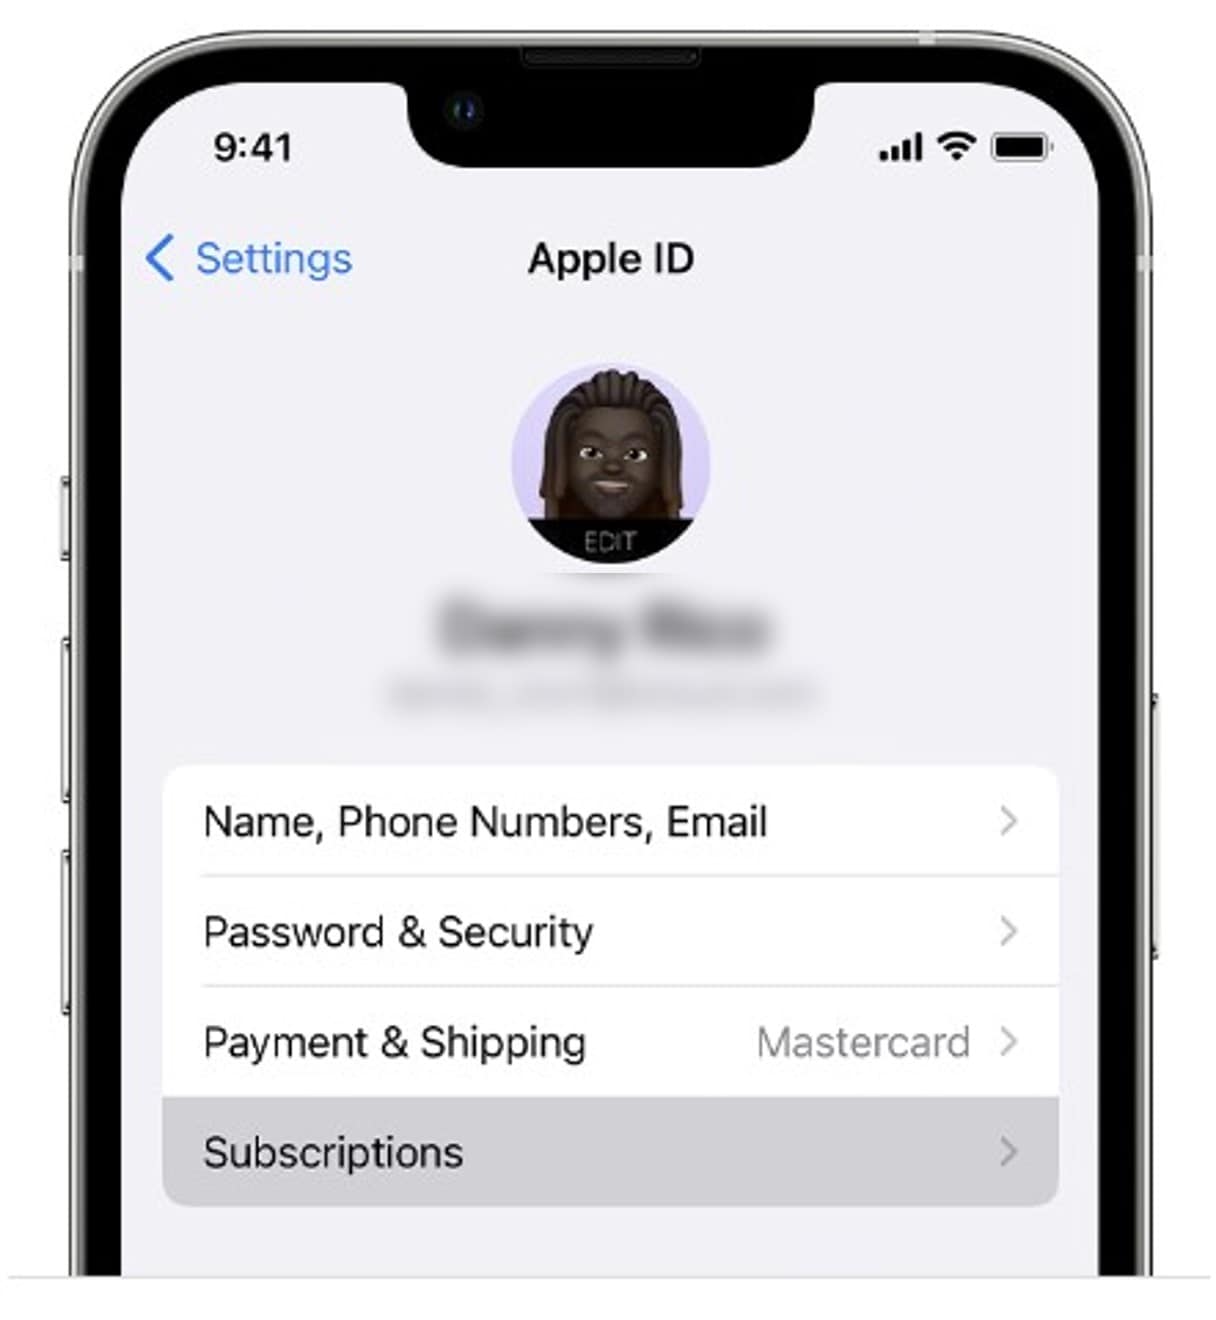 apple id subscriptions on iphone